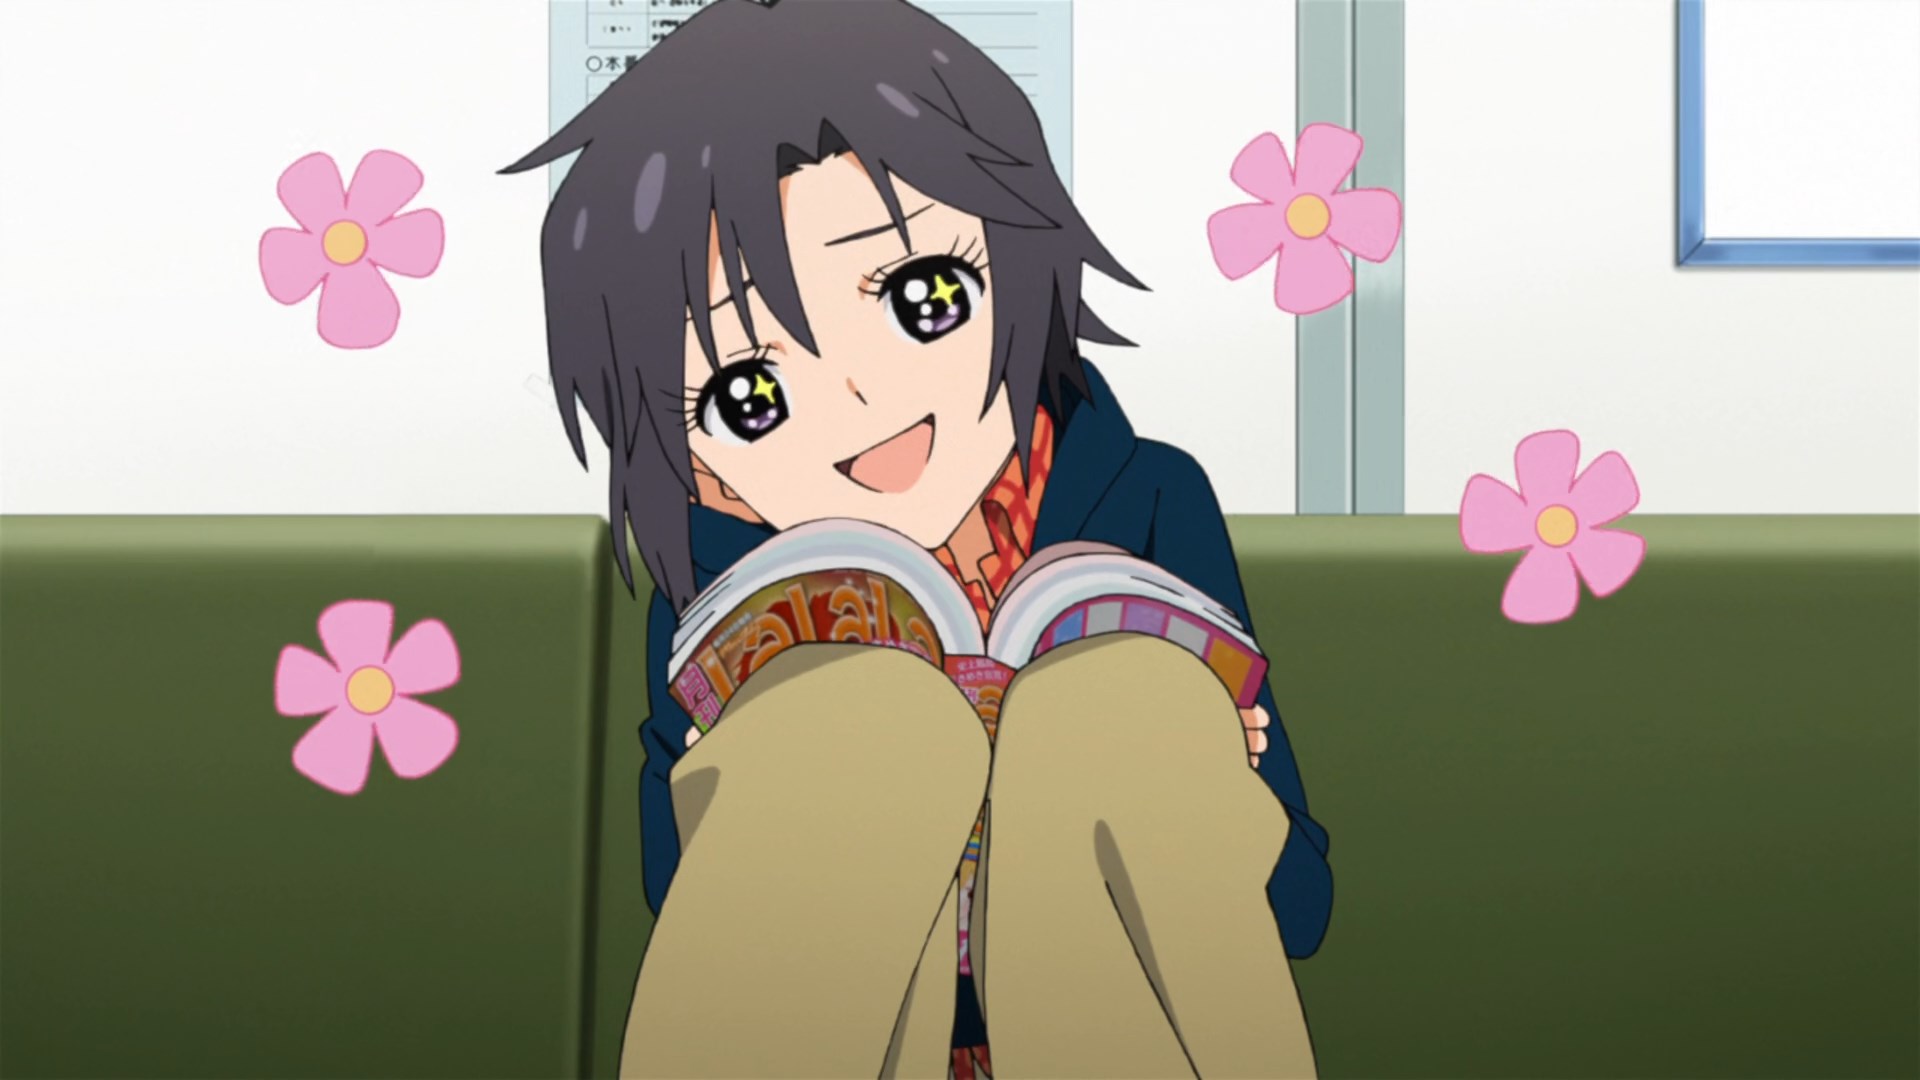 Makoto reading a shojo manga with big sparkling eyes and flowers popping up around her